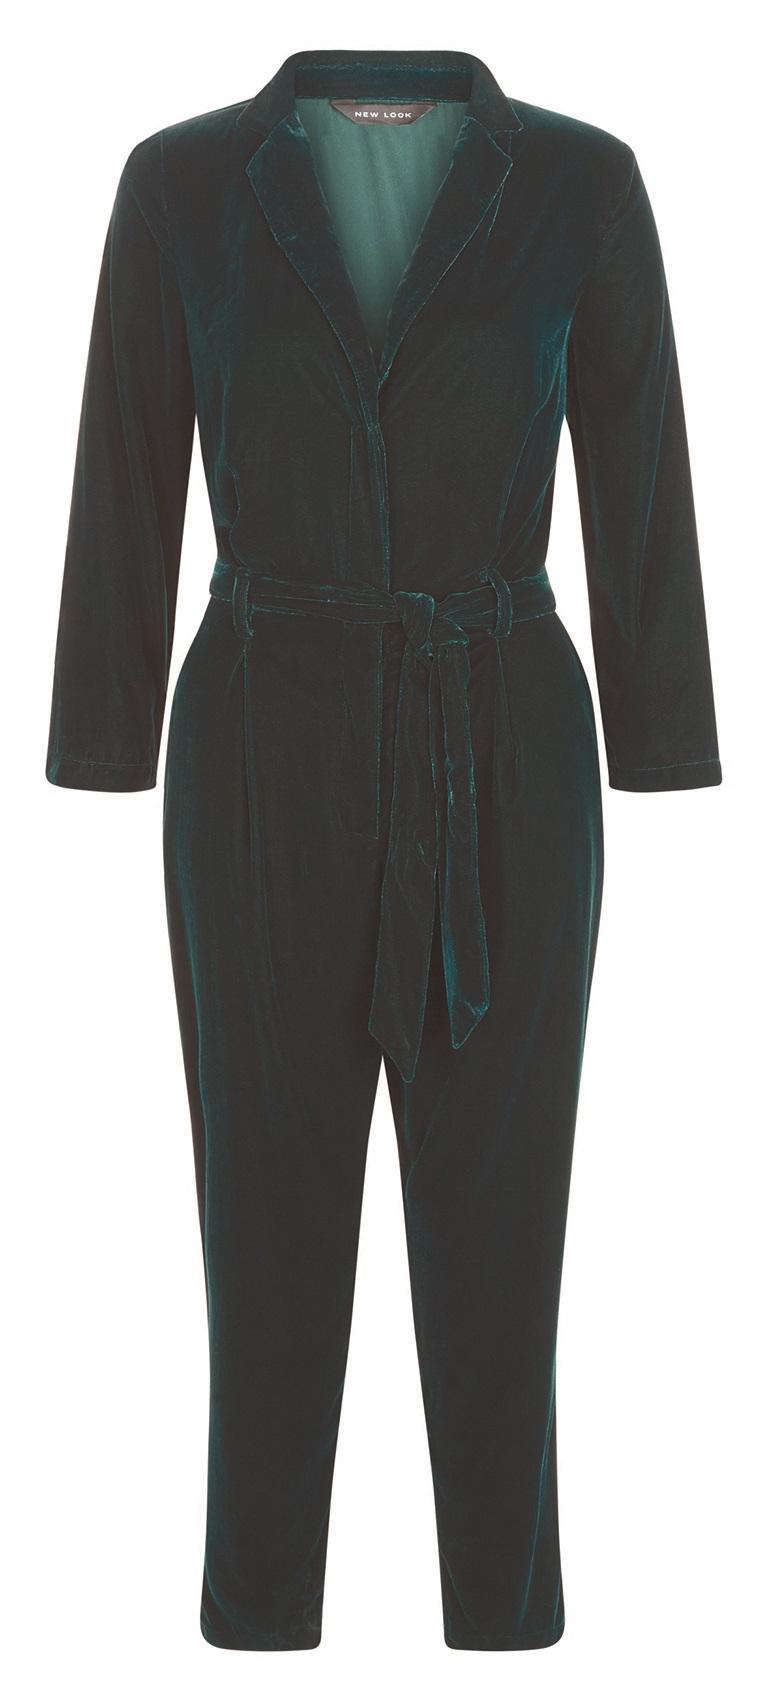 New Look, Green Velvet Jumpsuit, £34.99